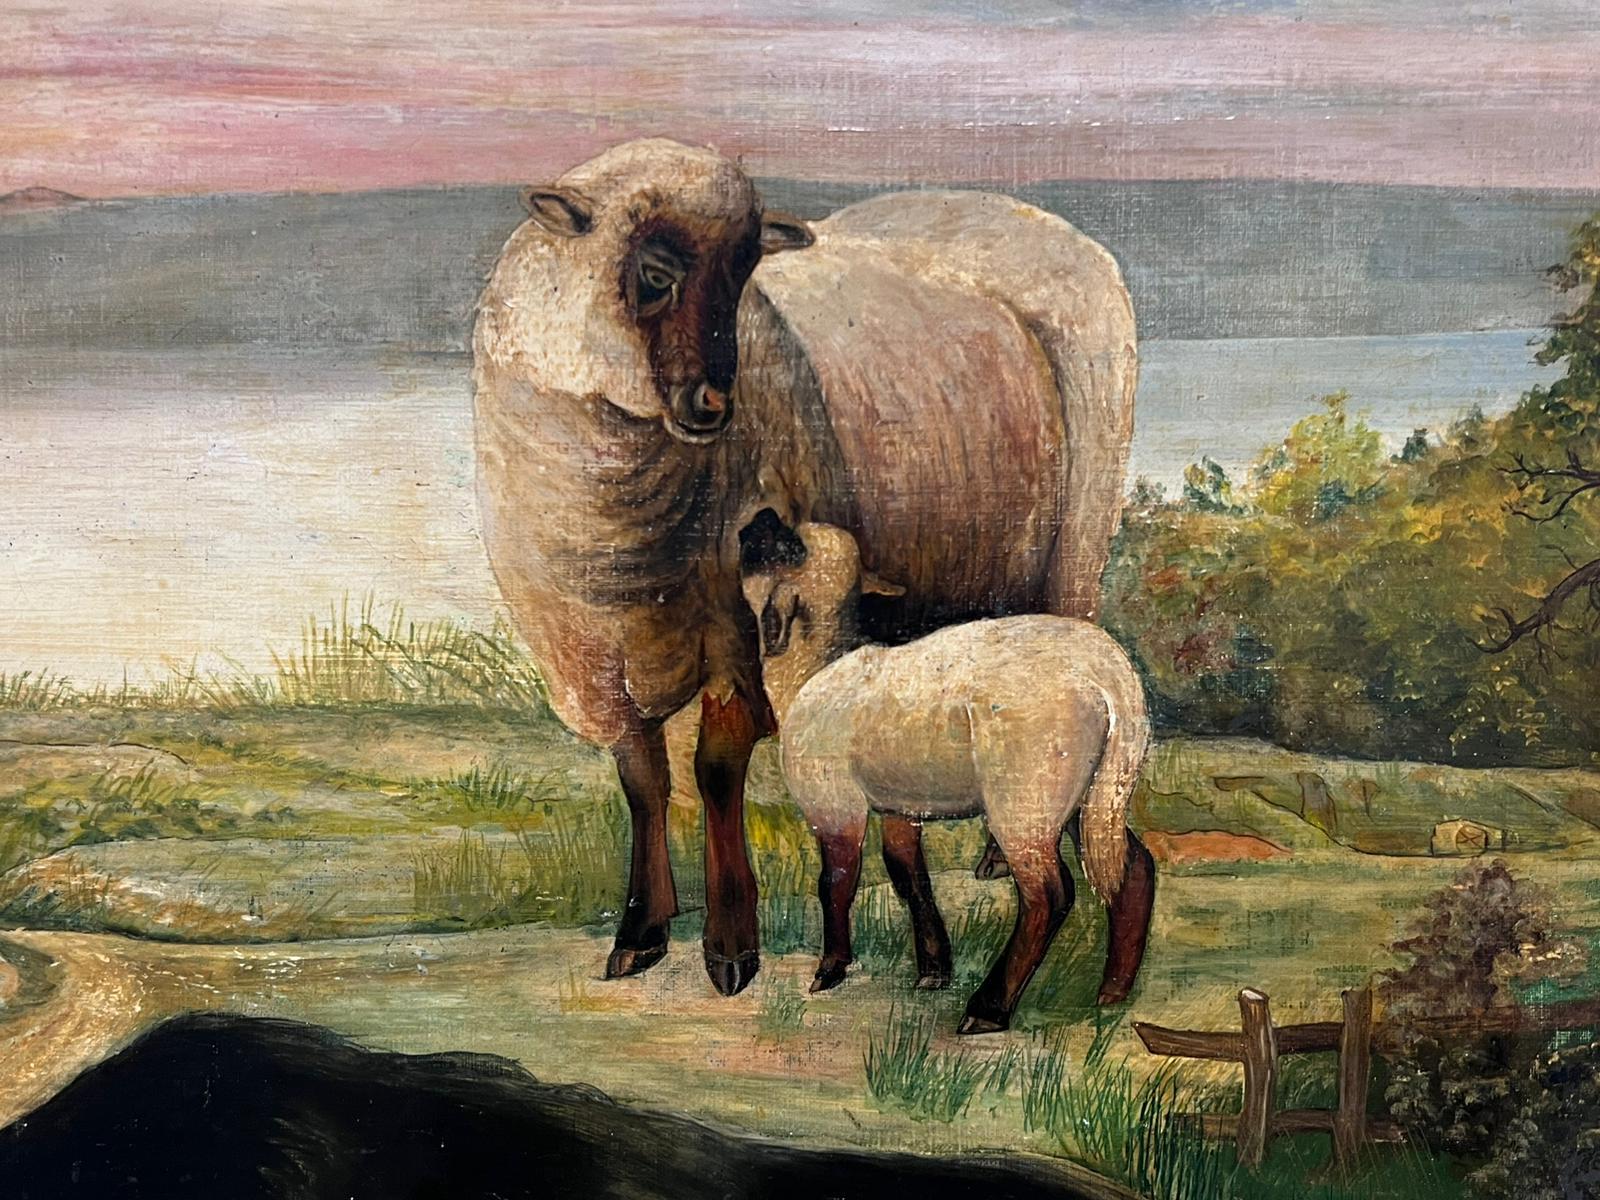 Highland Sheep Dog & Sheep in Loch Landscape English Naive Folk Art Oil Painting 1